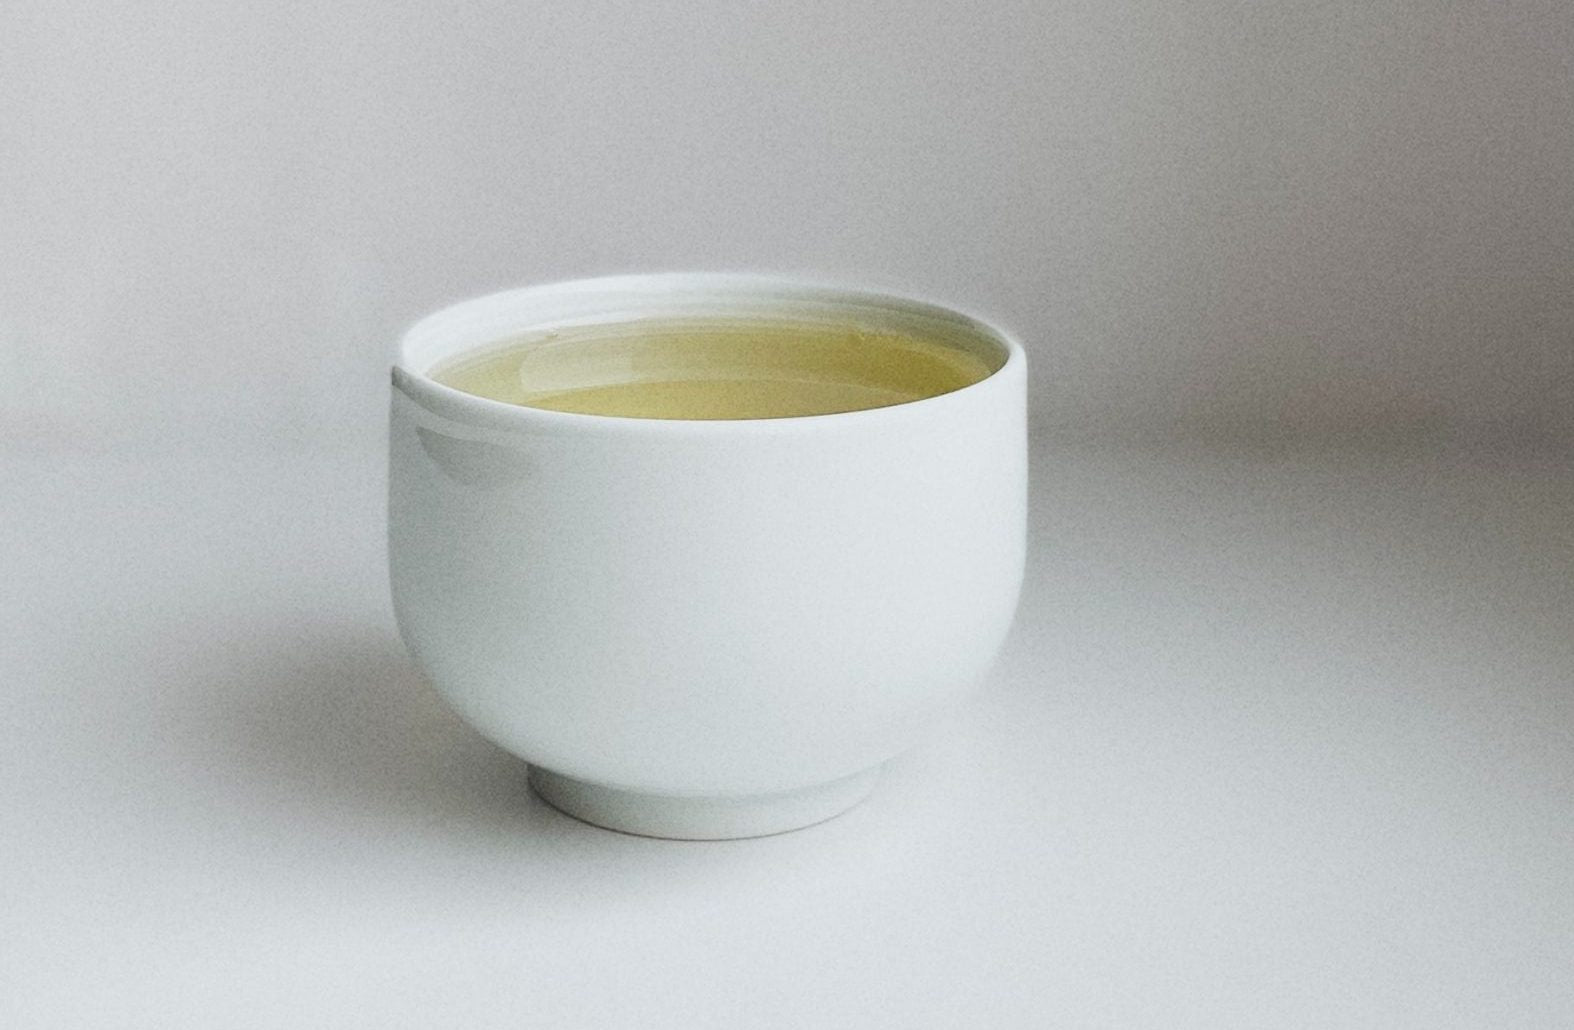 What’s White Tea? Let’s Learn Some Famous White Tea!